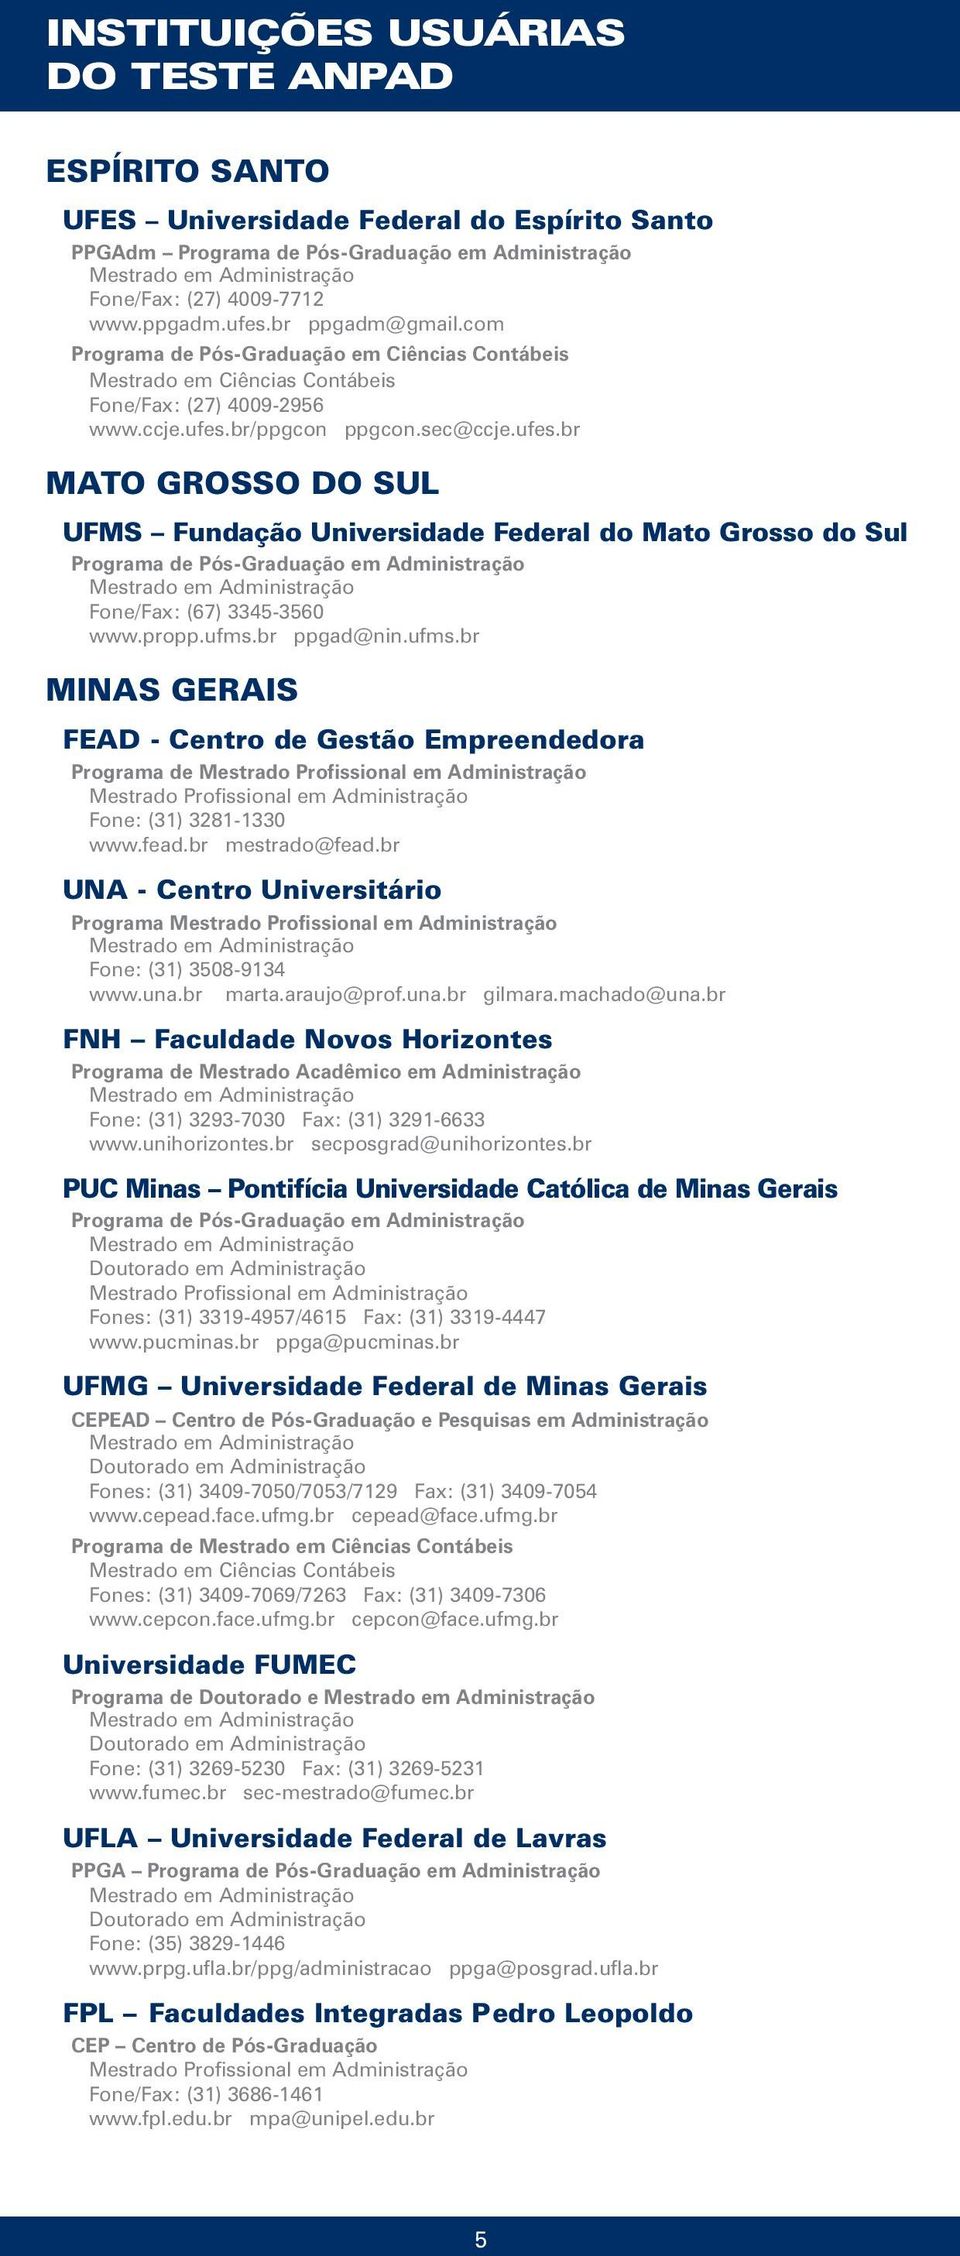 propp.ufms.br ppgad@nin.ufms.br MINAS GERAIS FEAD - Centro de Gestão Empreendedora Programa de Fone: (31) 3281-1330 www.fead.br mestrado@fead.